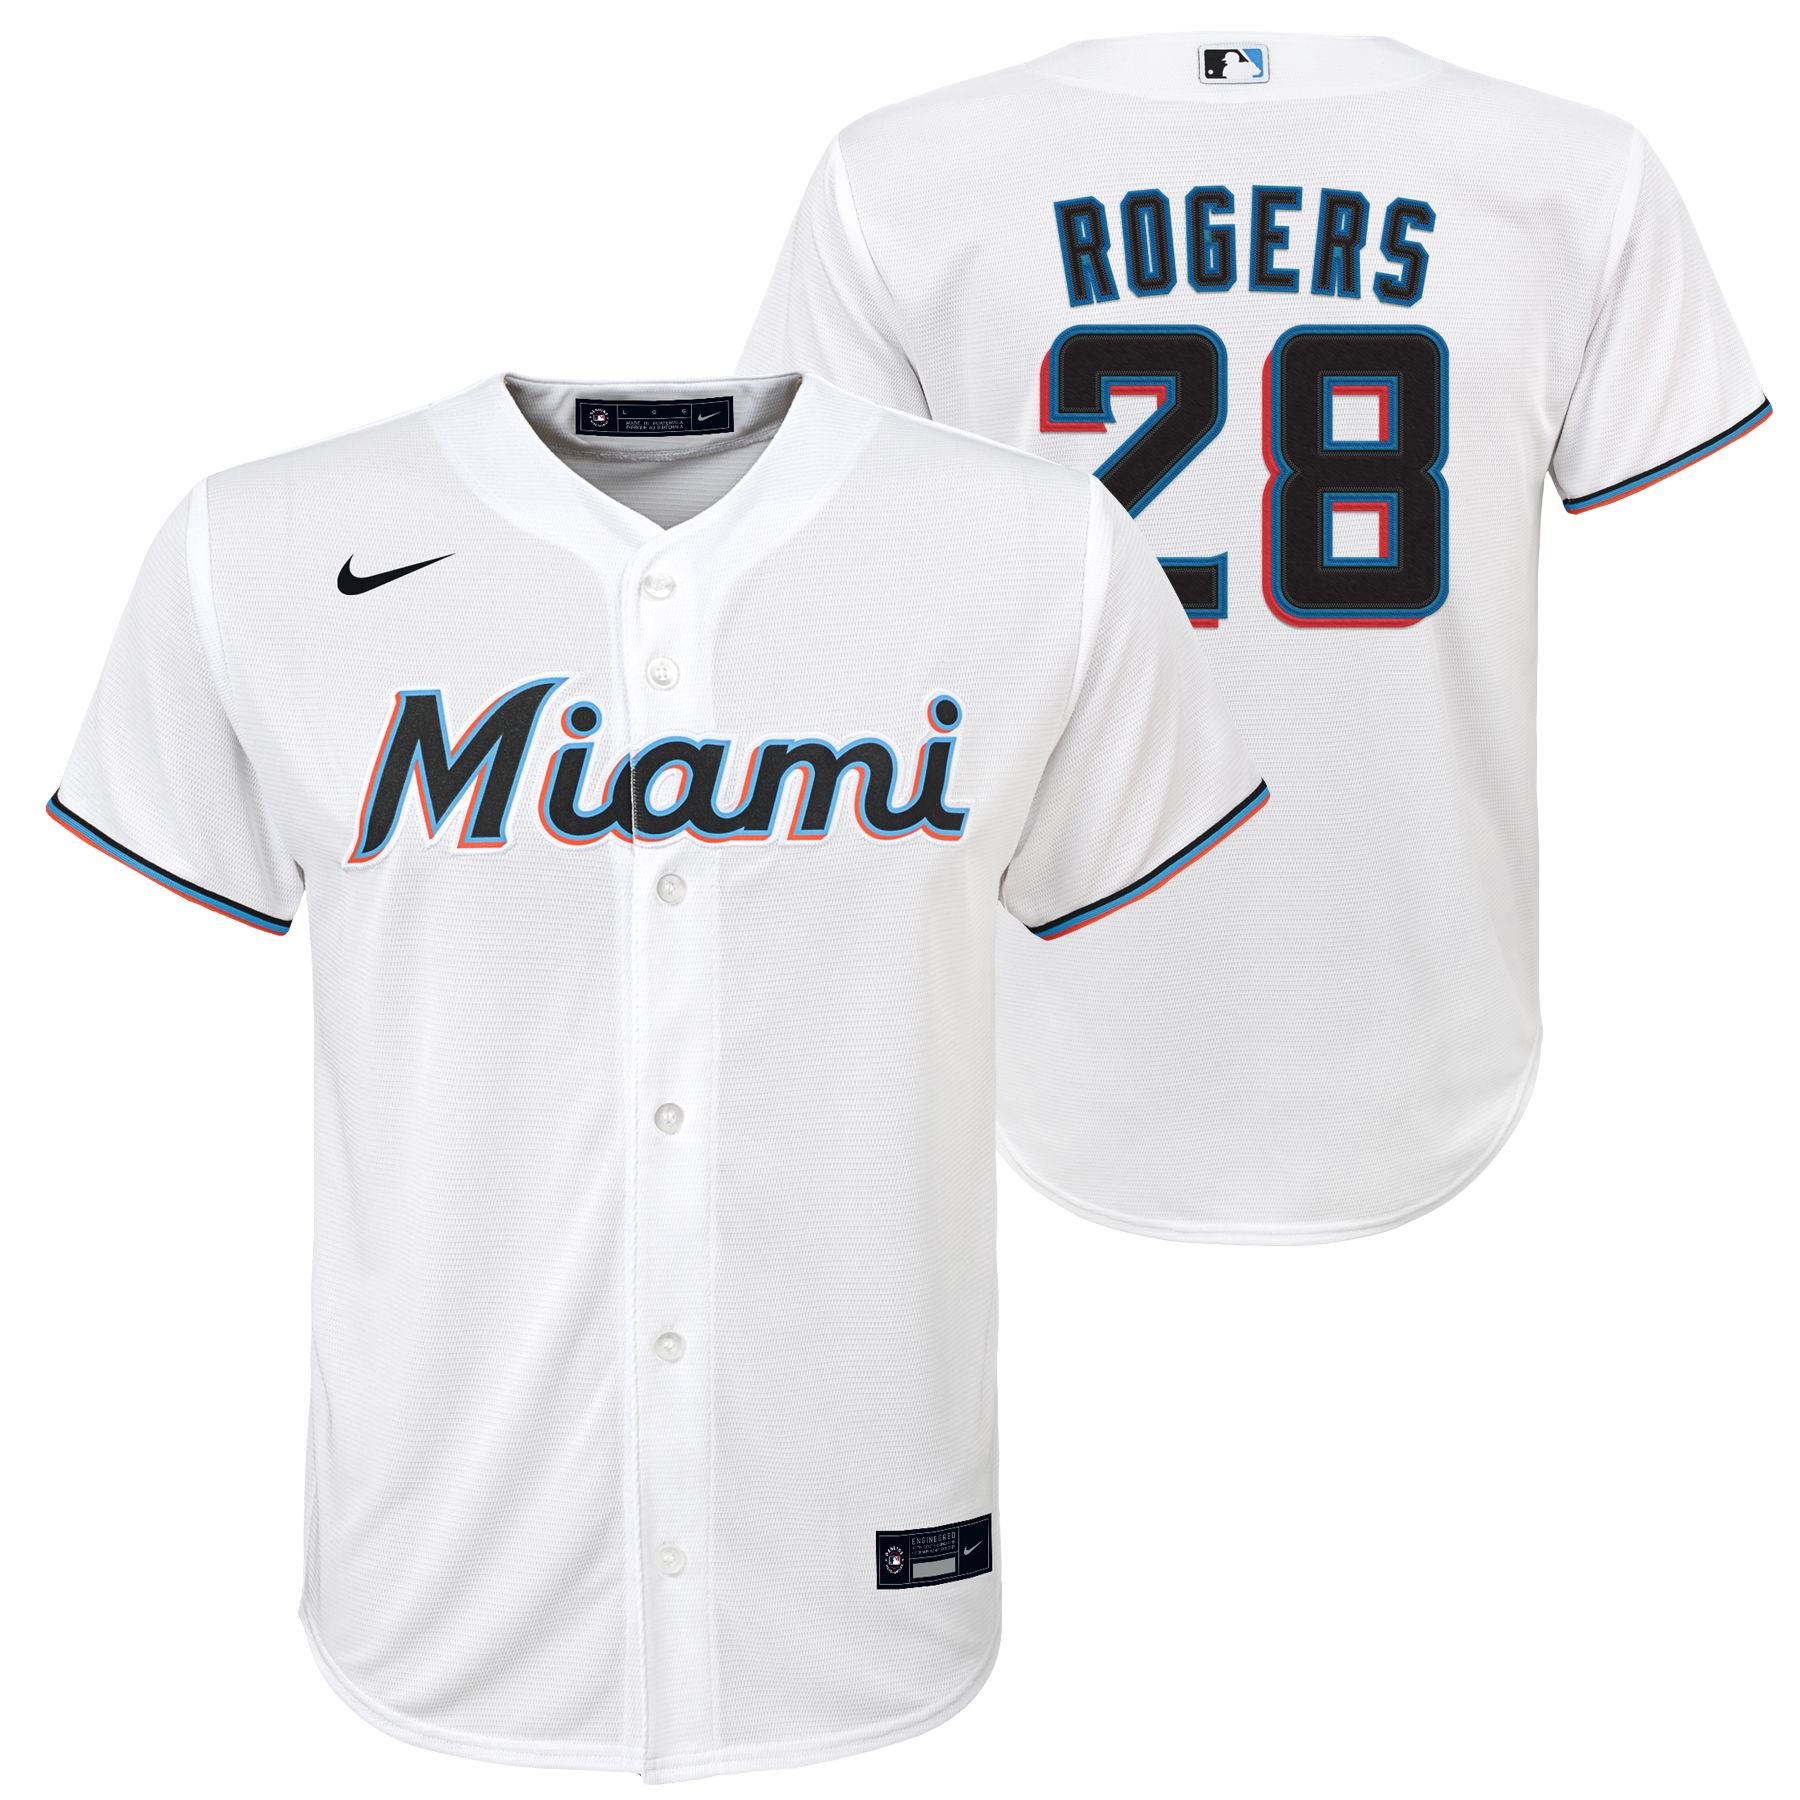 Nike / Youth Miami Marlins Trevor Rogers #28 White Replica Baseball Jersey